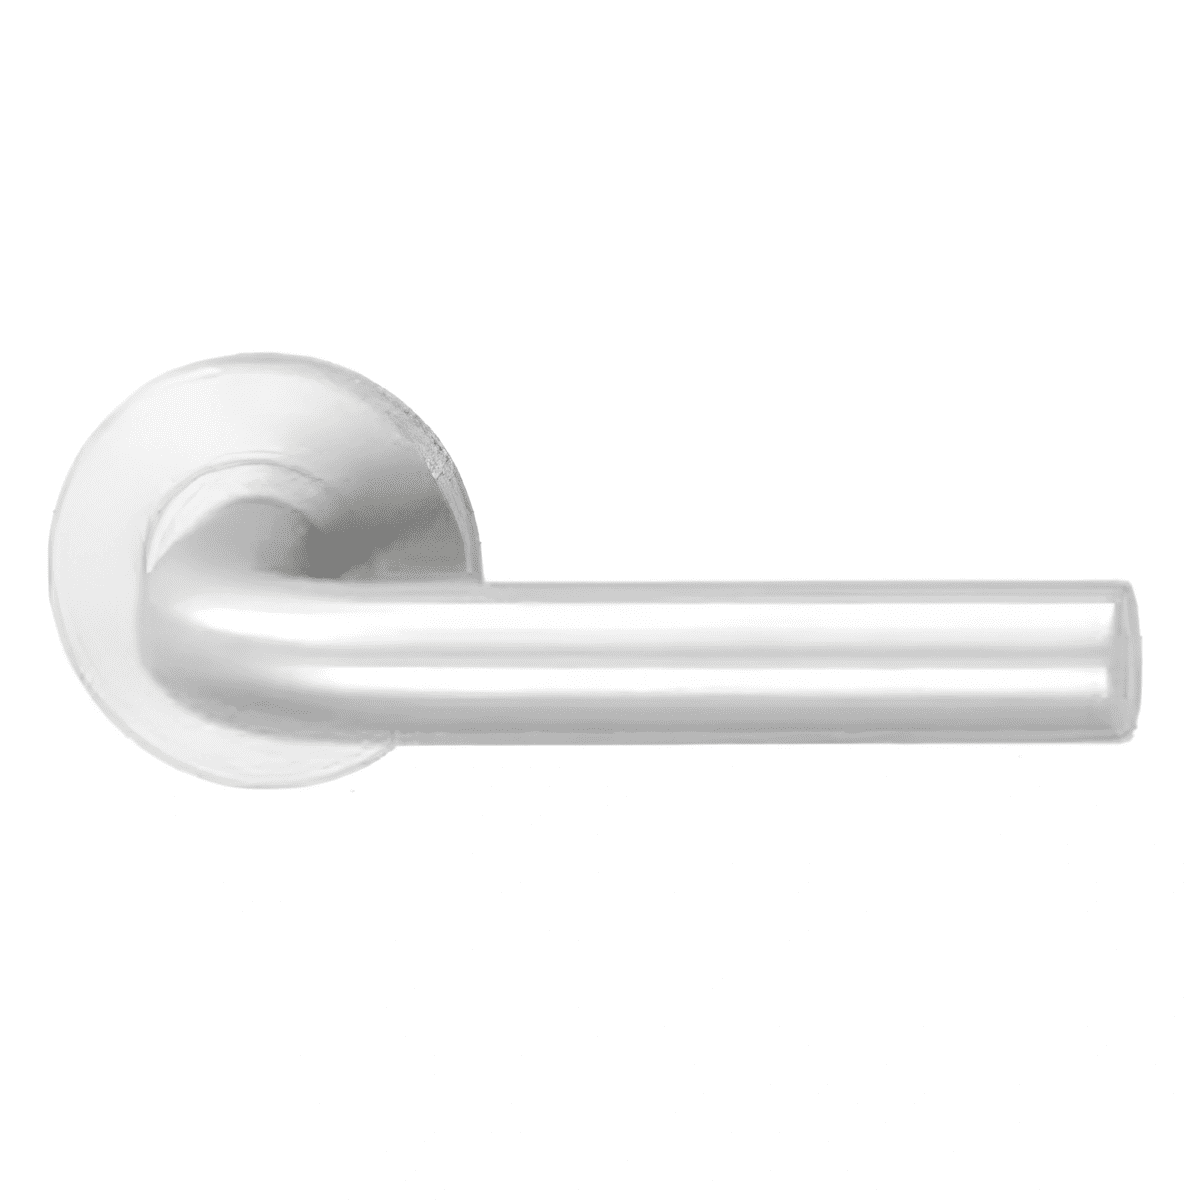 Hafi door handle-201-stainless steel-brushed